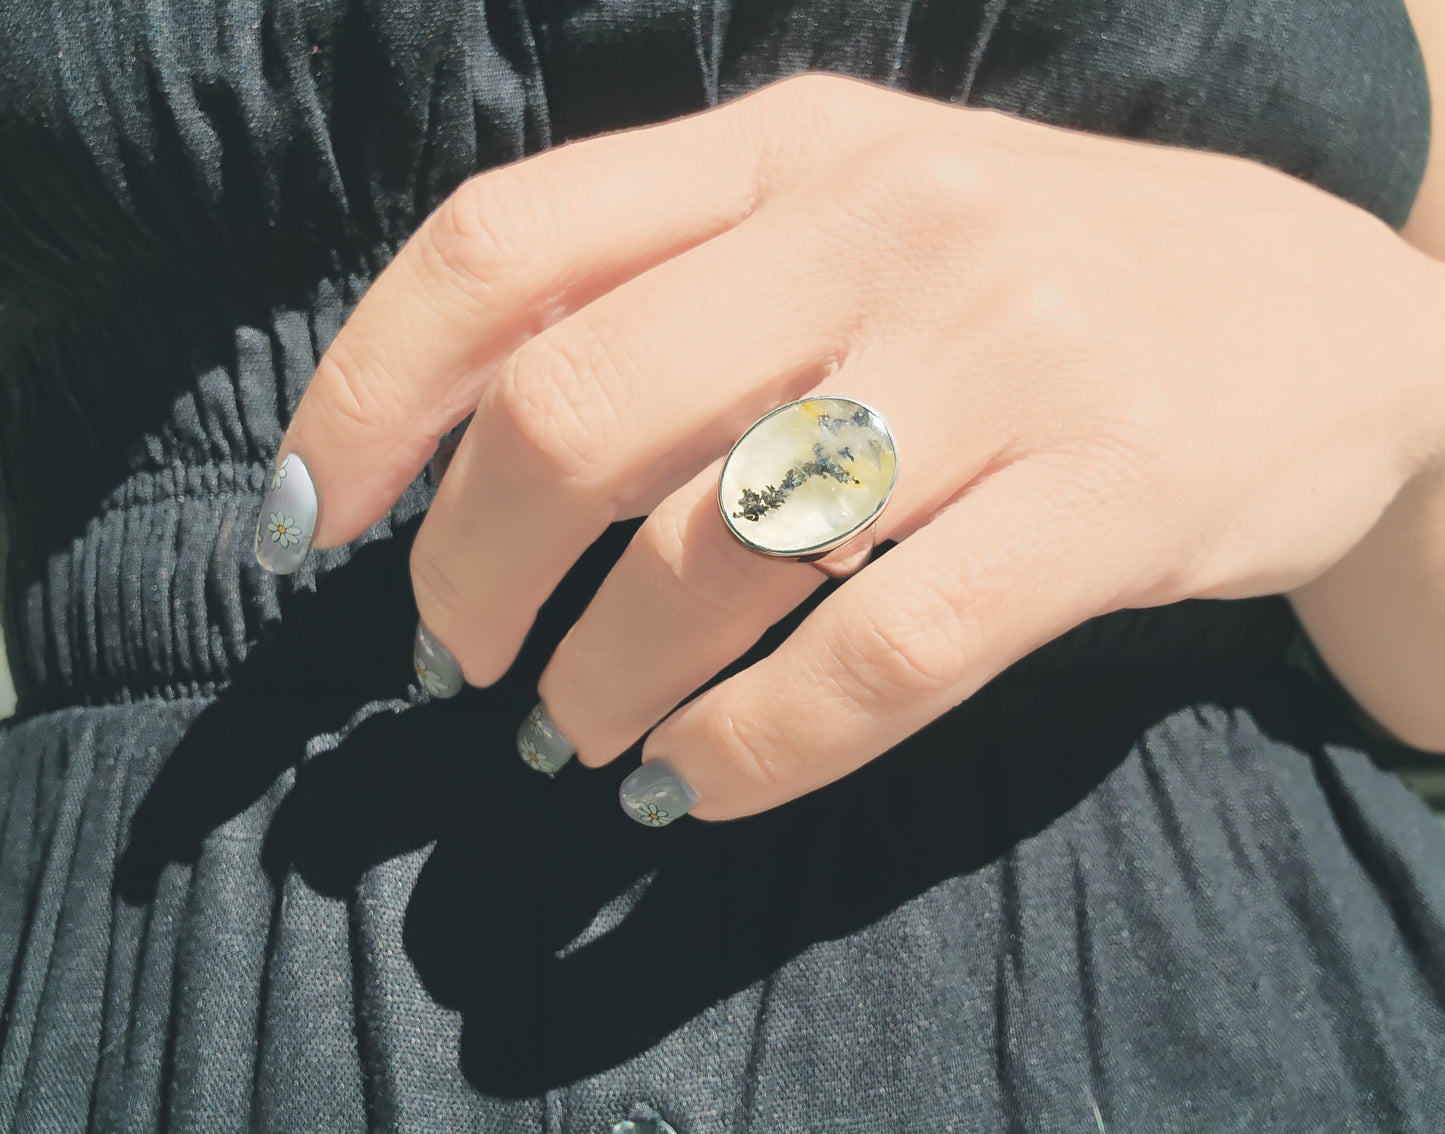 Oval Cut Dendritic Quartz Ring in Sterling Silver